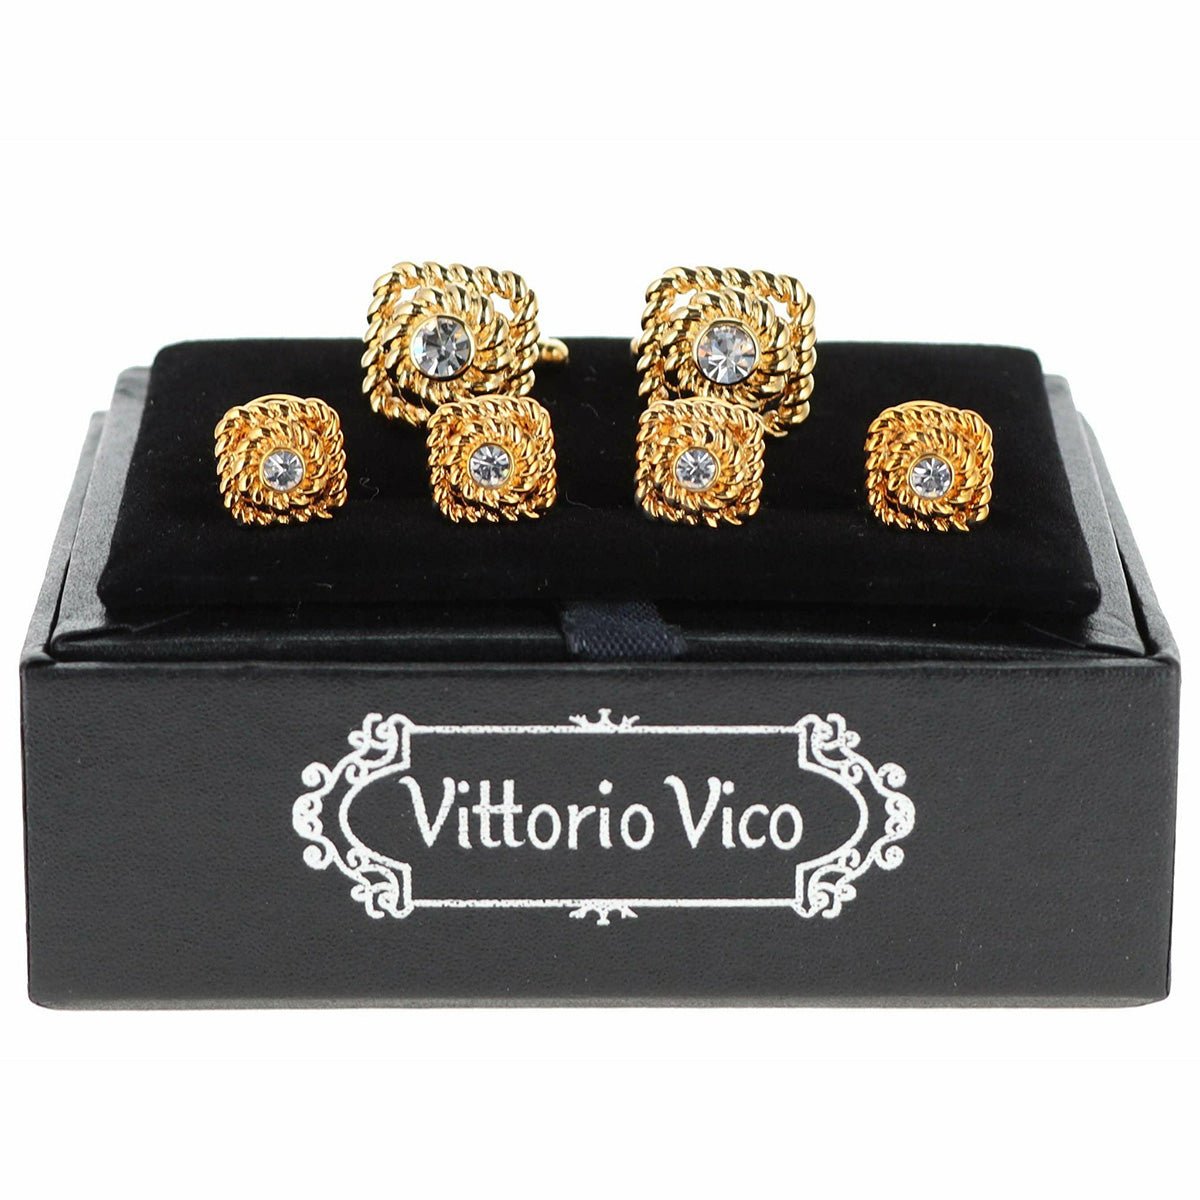 Vittorio Vico Gold Cufflinks & Stud Sets by Classy Cufflinks - fs-213-gold - Classy Cufflinks